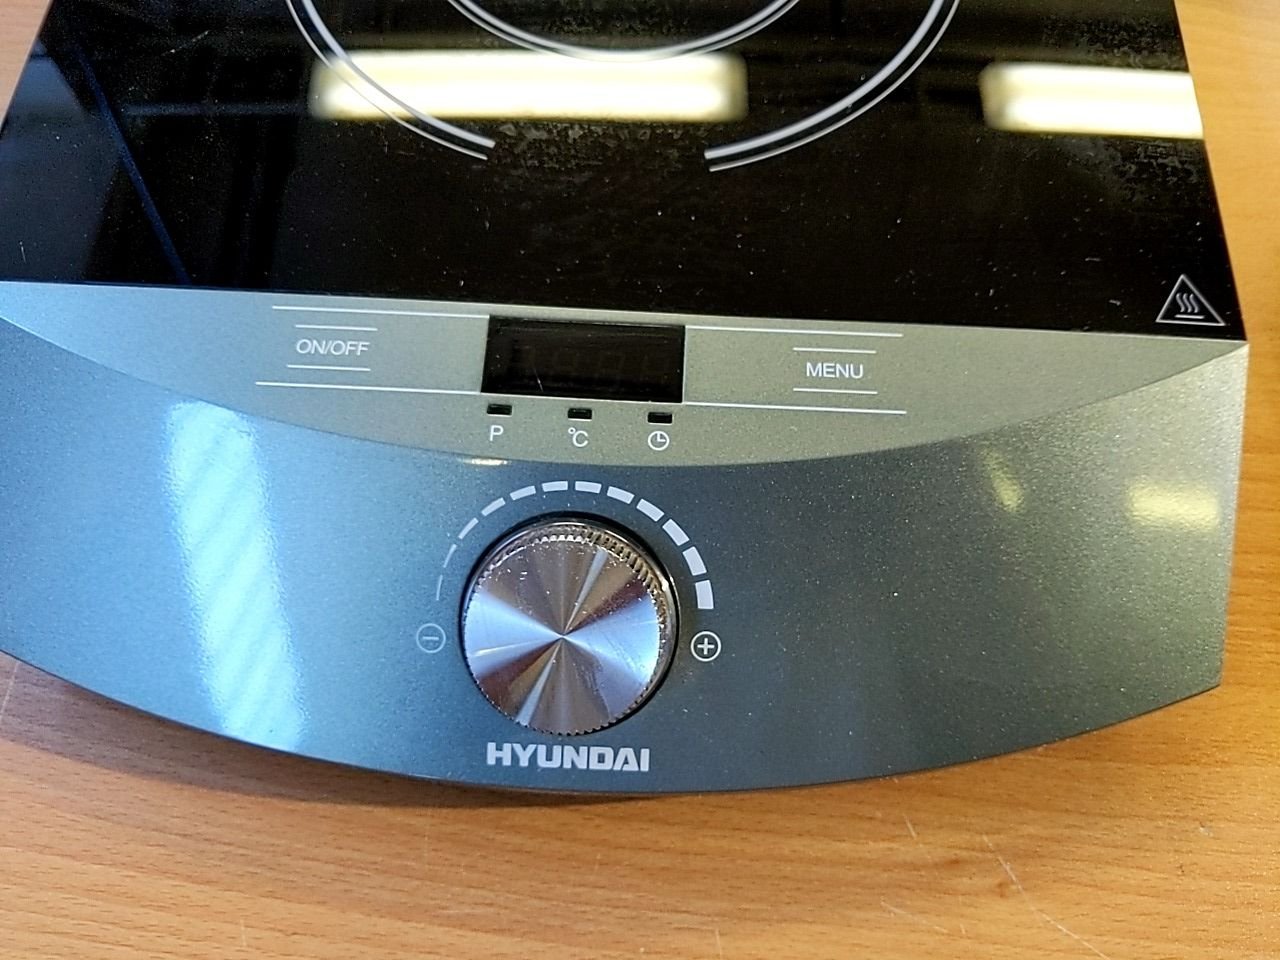 Indukční jednoplotnový vařič se sklokeramickou varnou deskou Hyundai IND 133